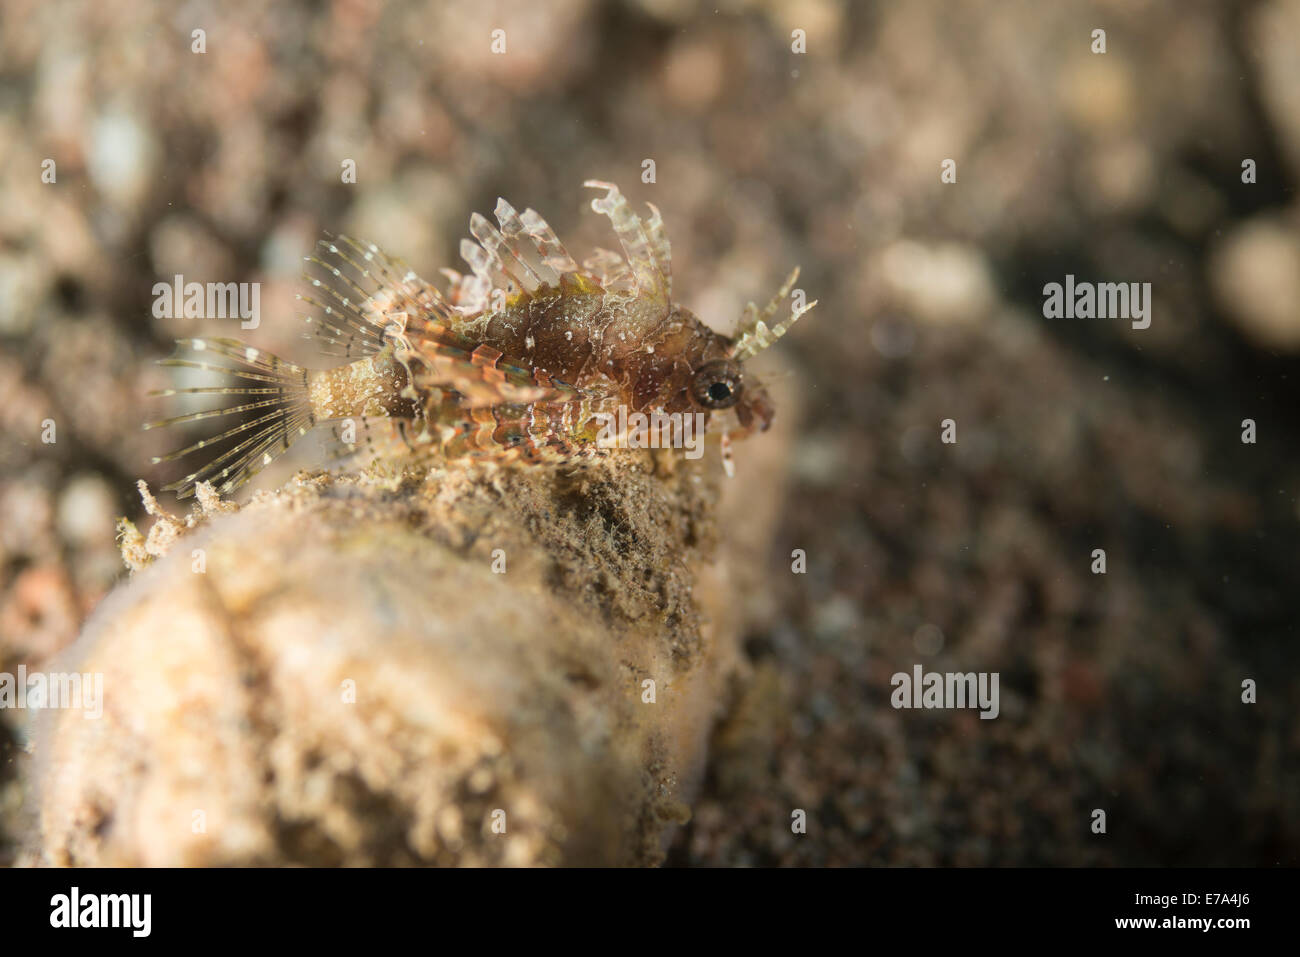 Shortfin lionfish or fuzzy dwarf lionfish (dendrochirus brachypterus) Stock Photo